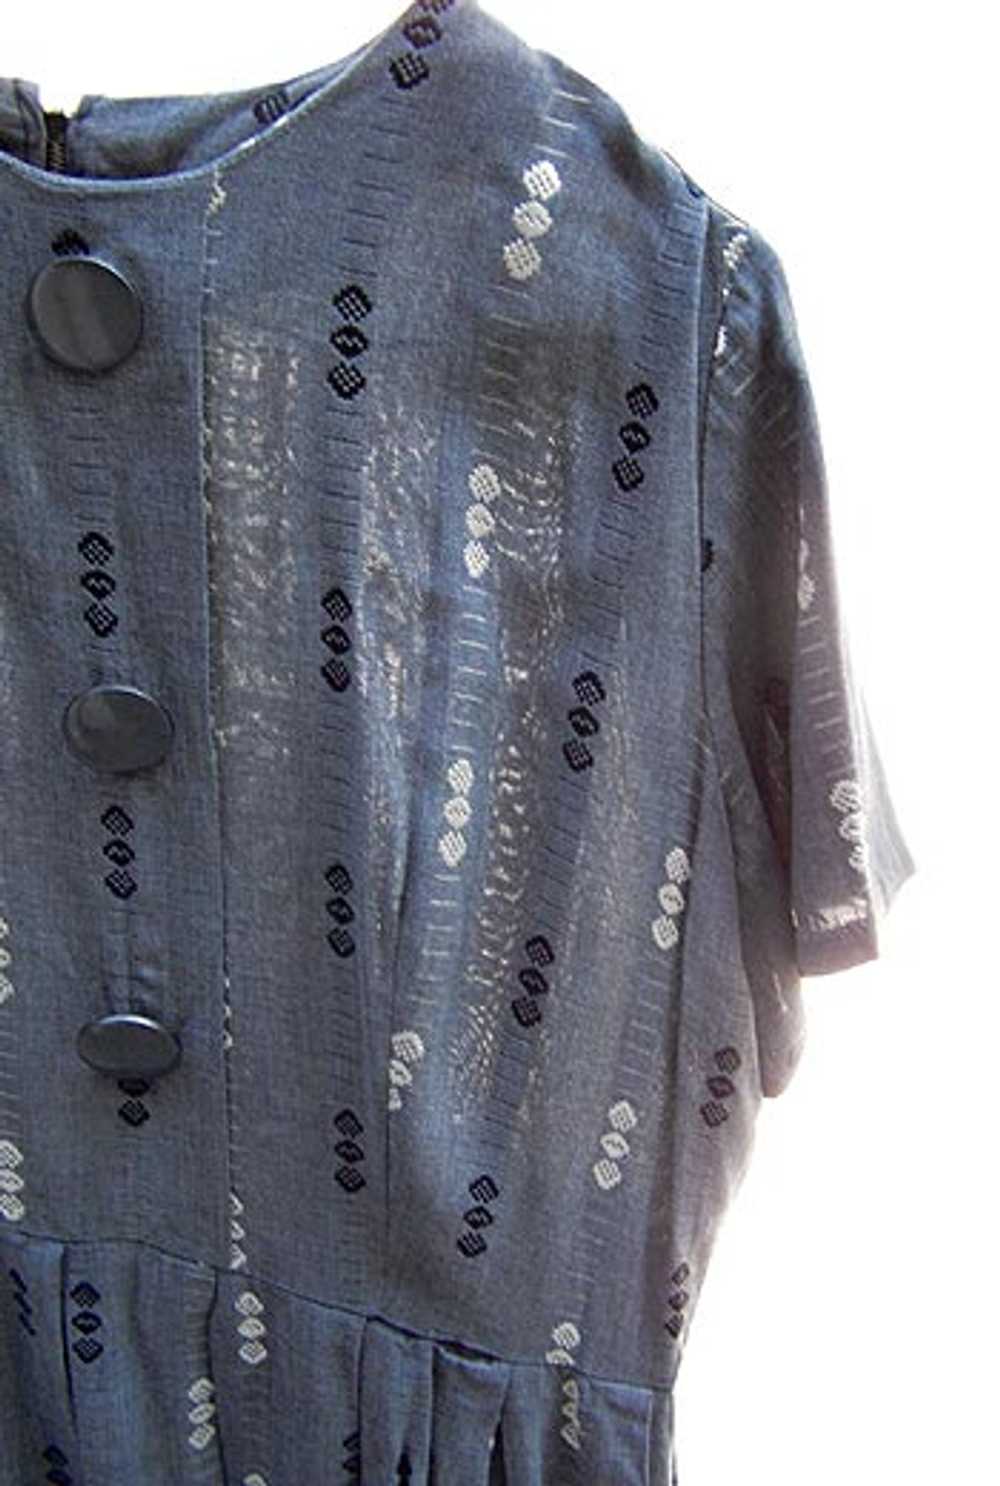 Grey shirtwaist dress 1X - image 4